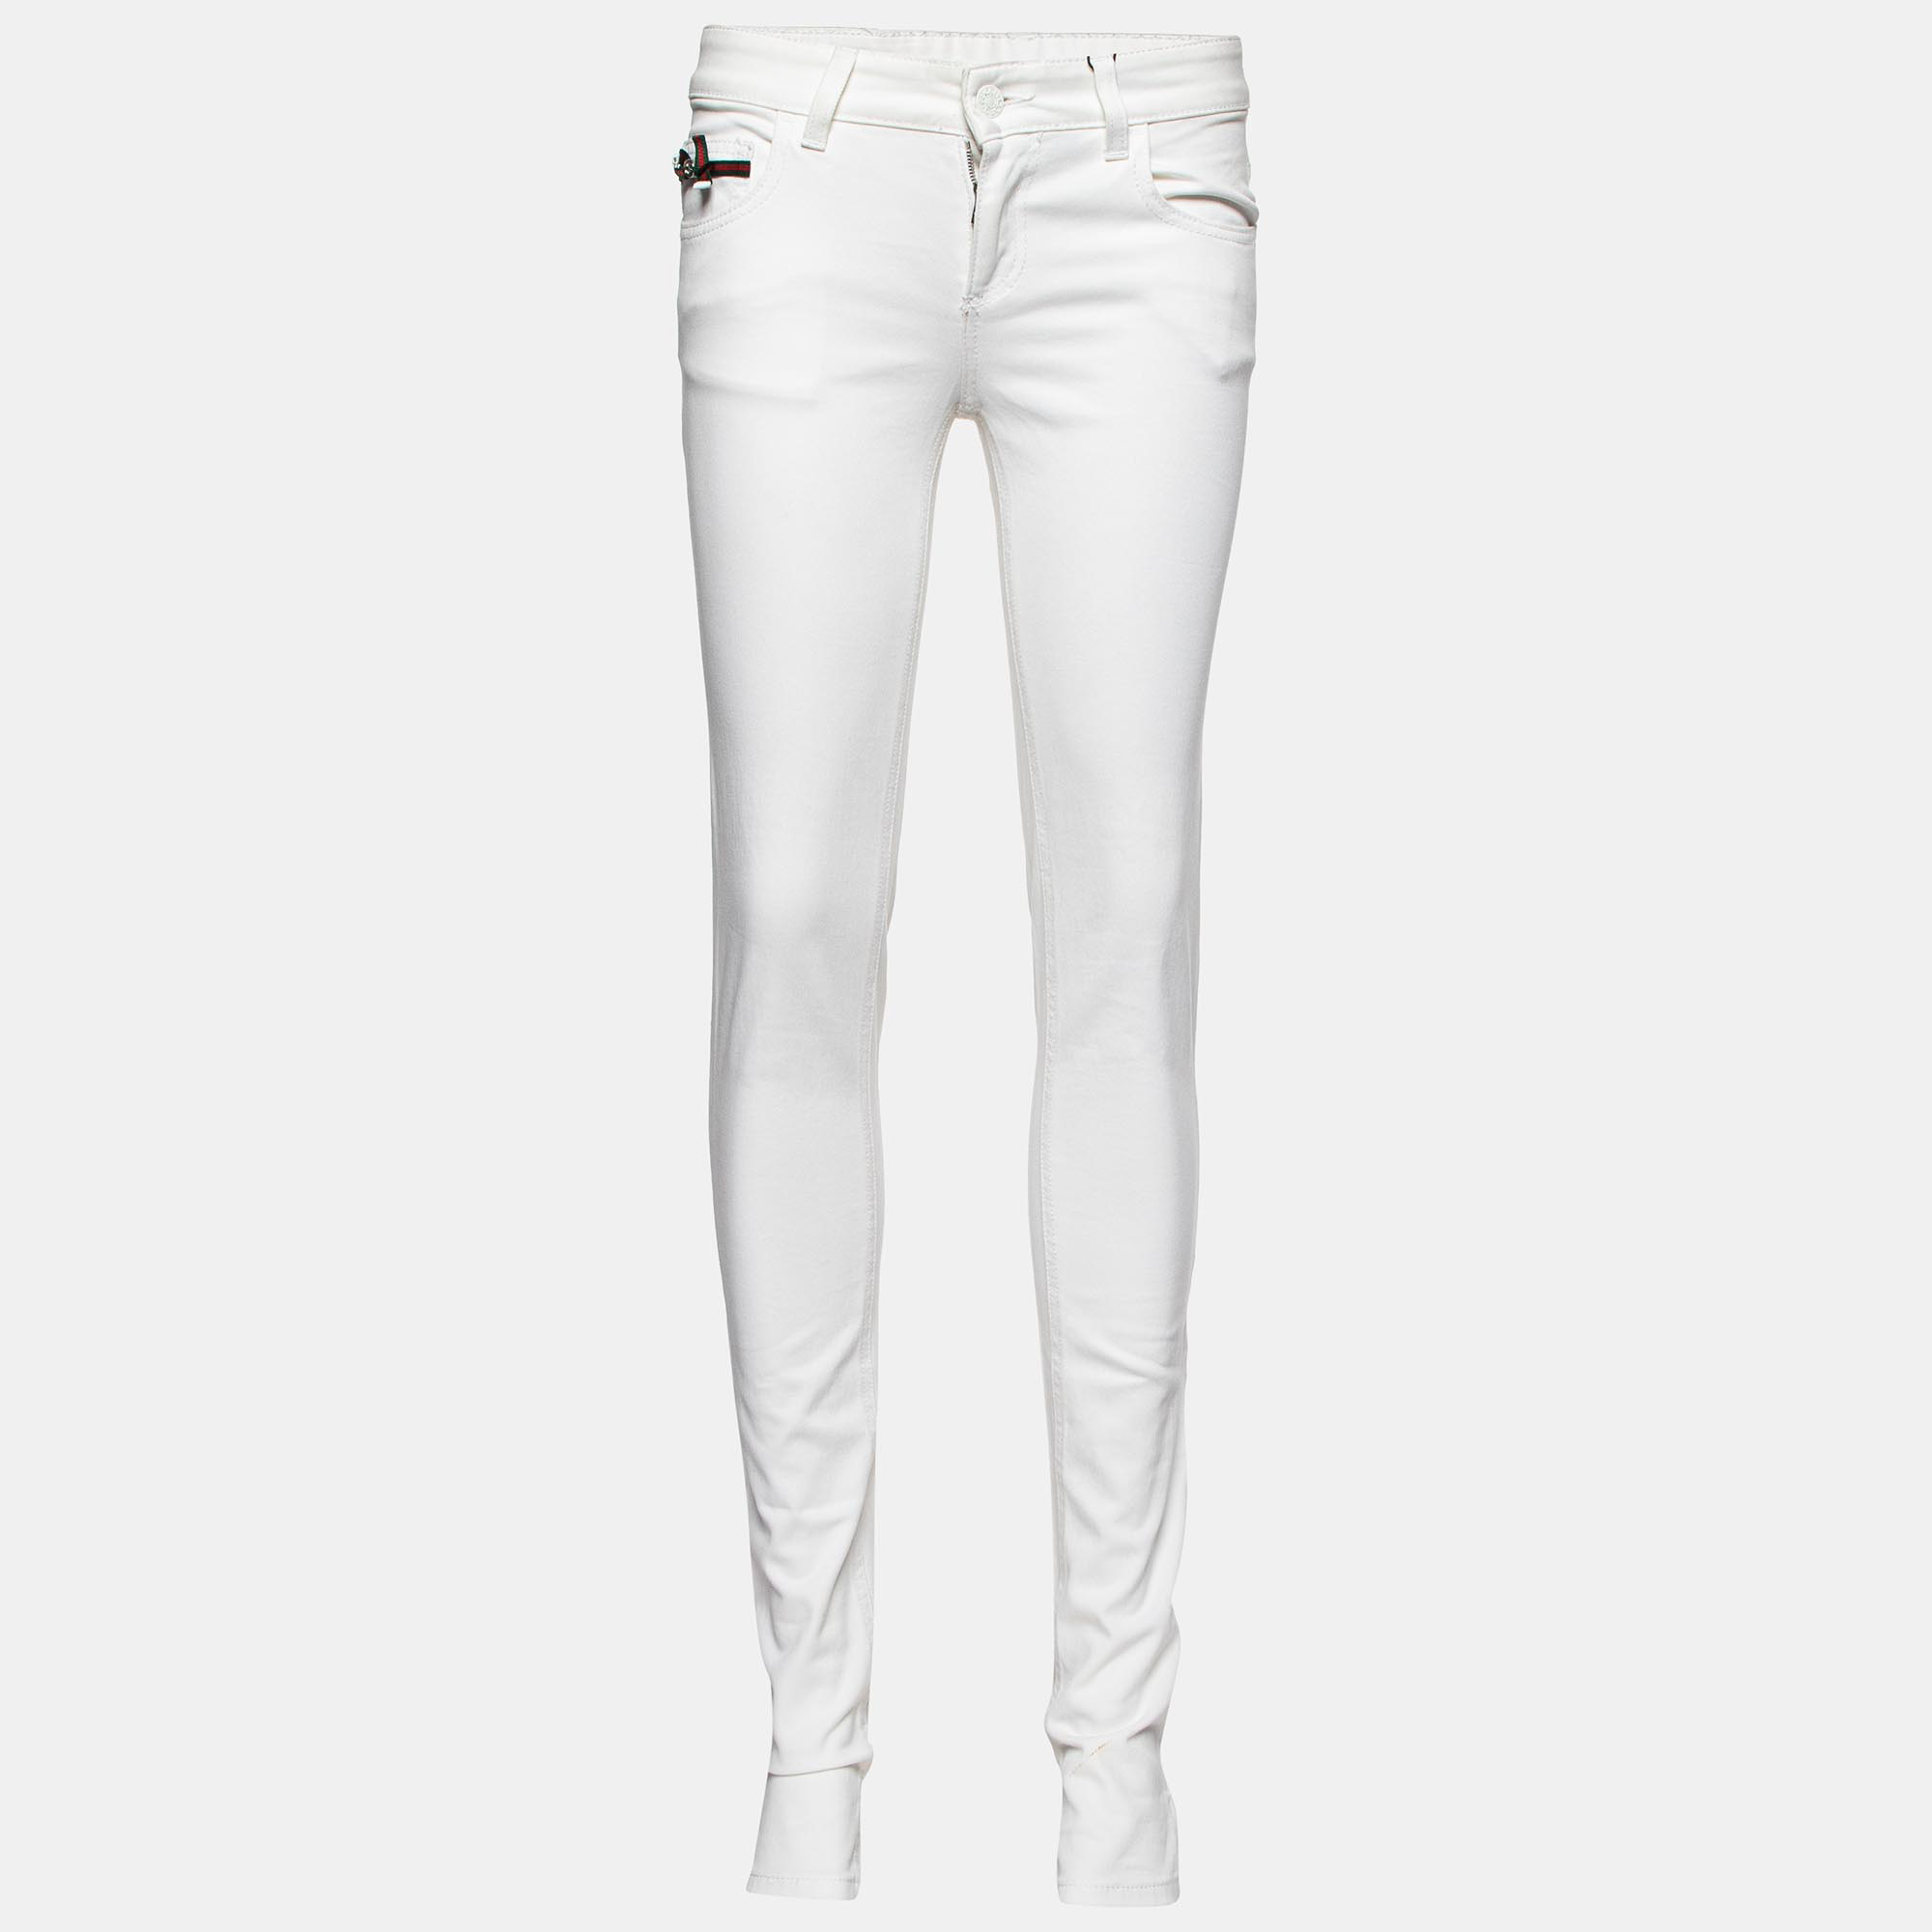 Gucci white denim slim fit legging jeans s/waist 30"